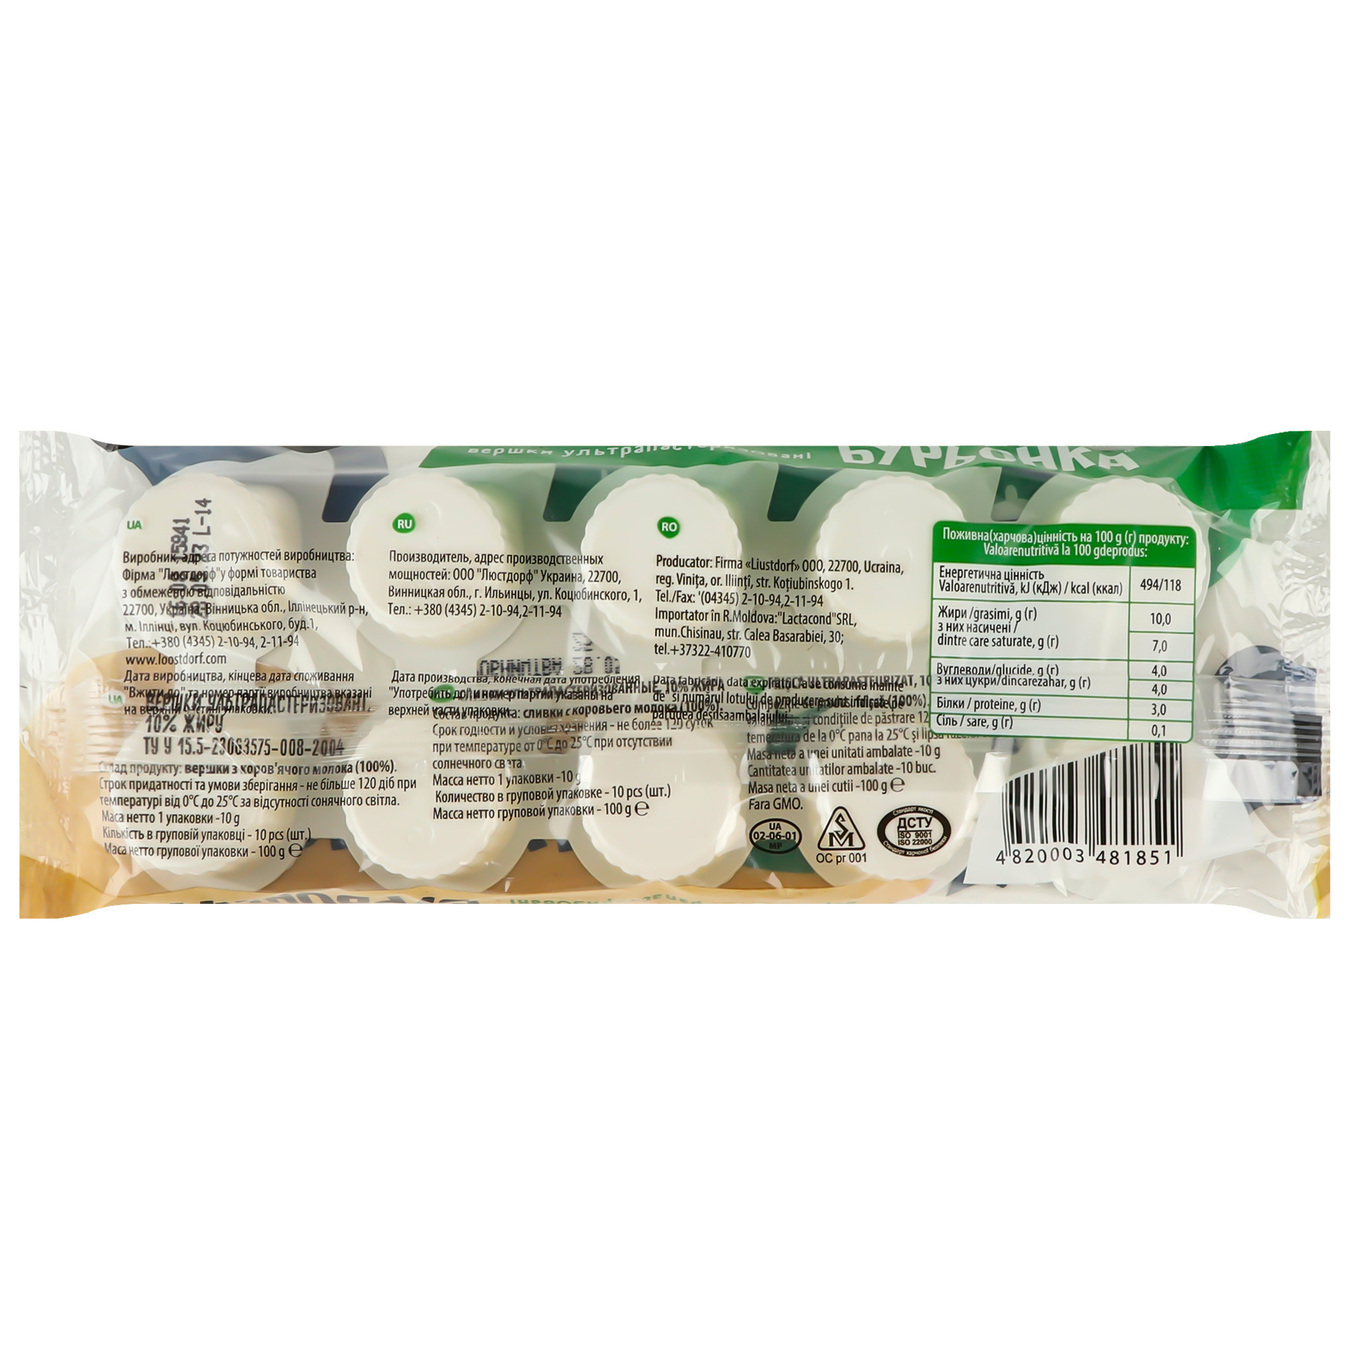 Burionka ultra-pasteurized Cream 10% 10*10g/pack 3